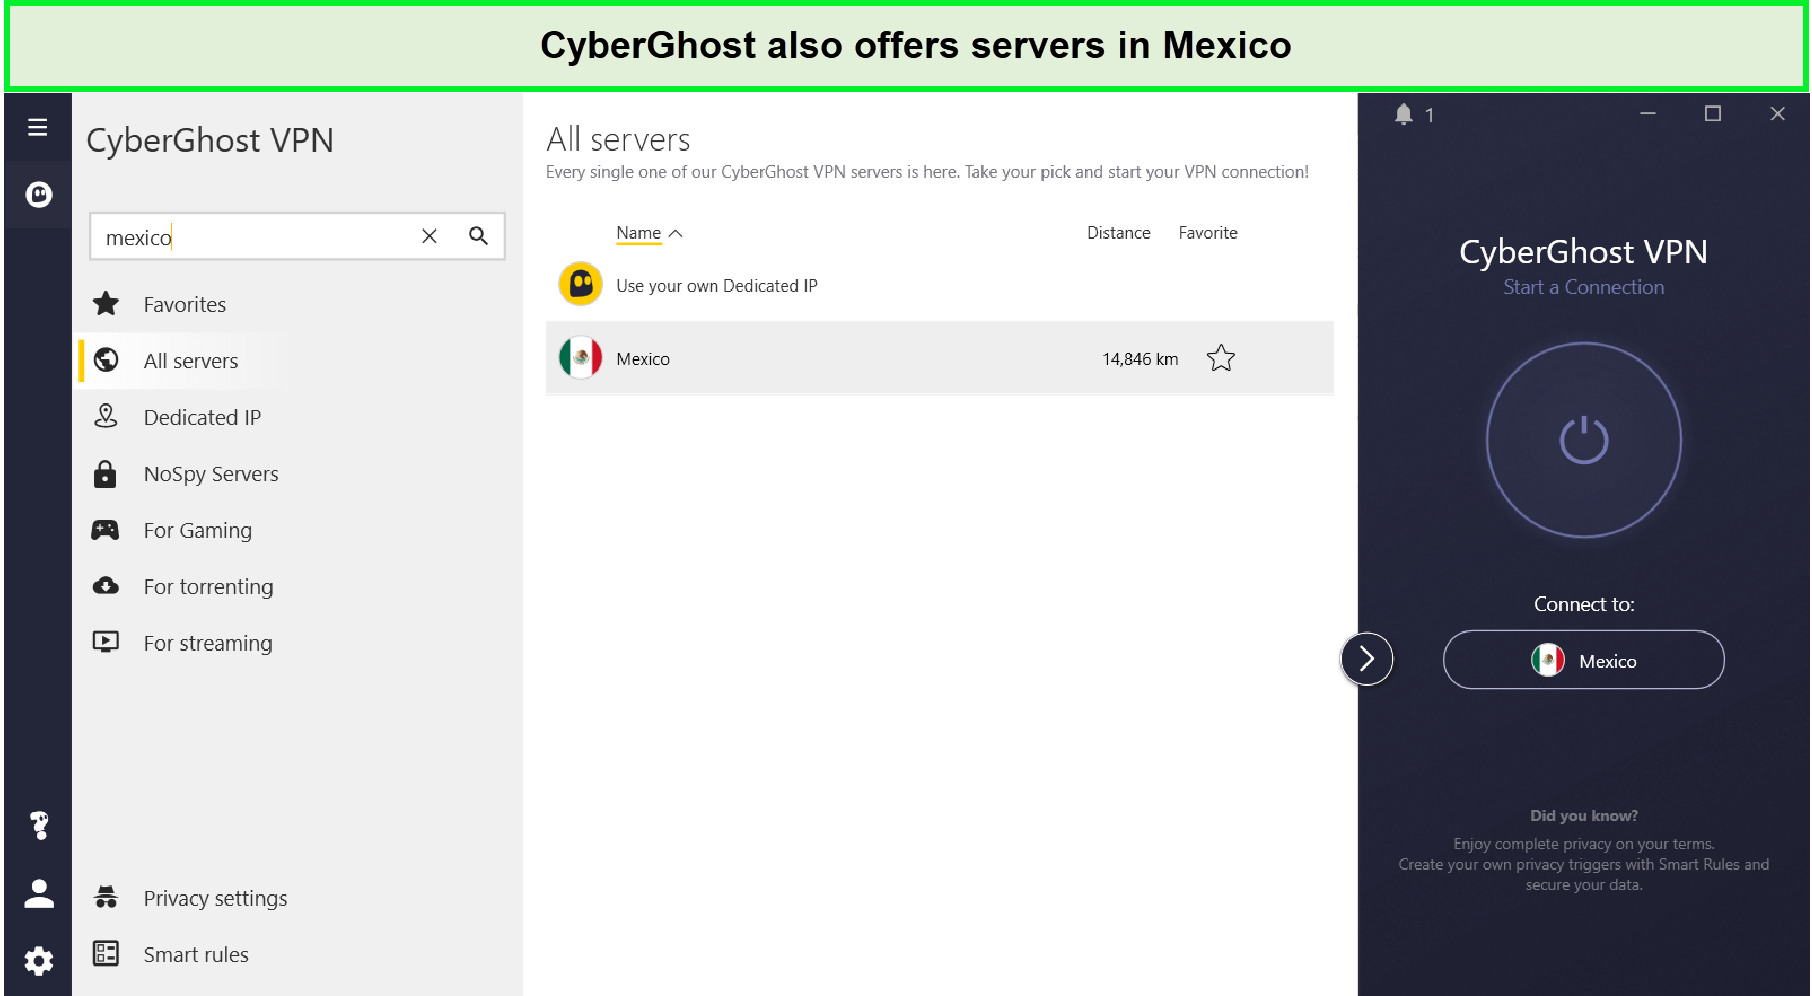 cyberghost-vpn-mexico-servers